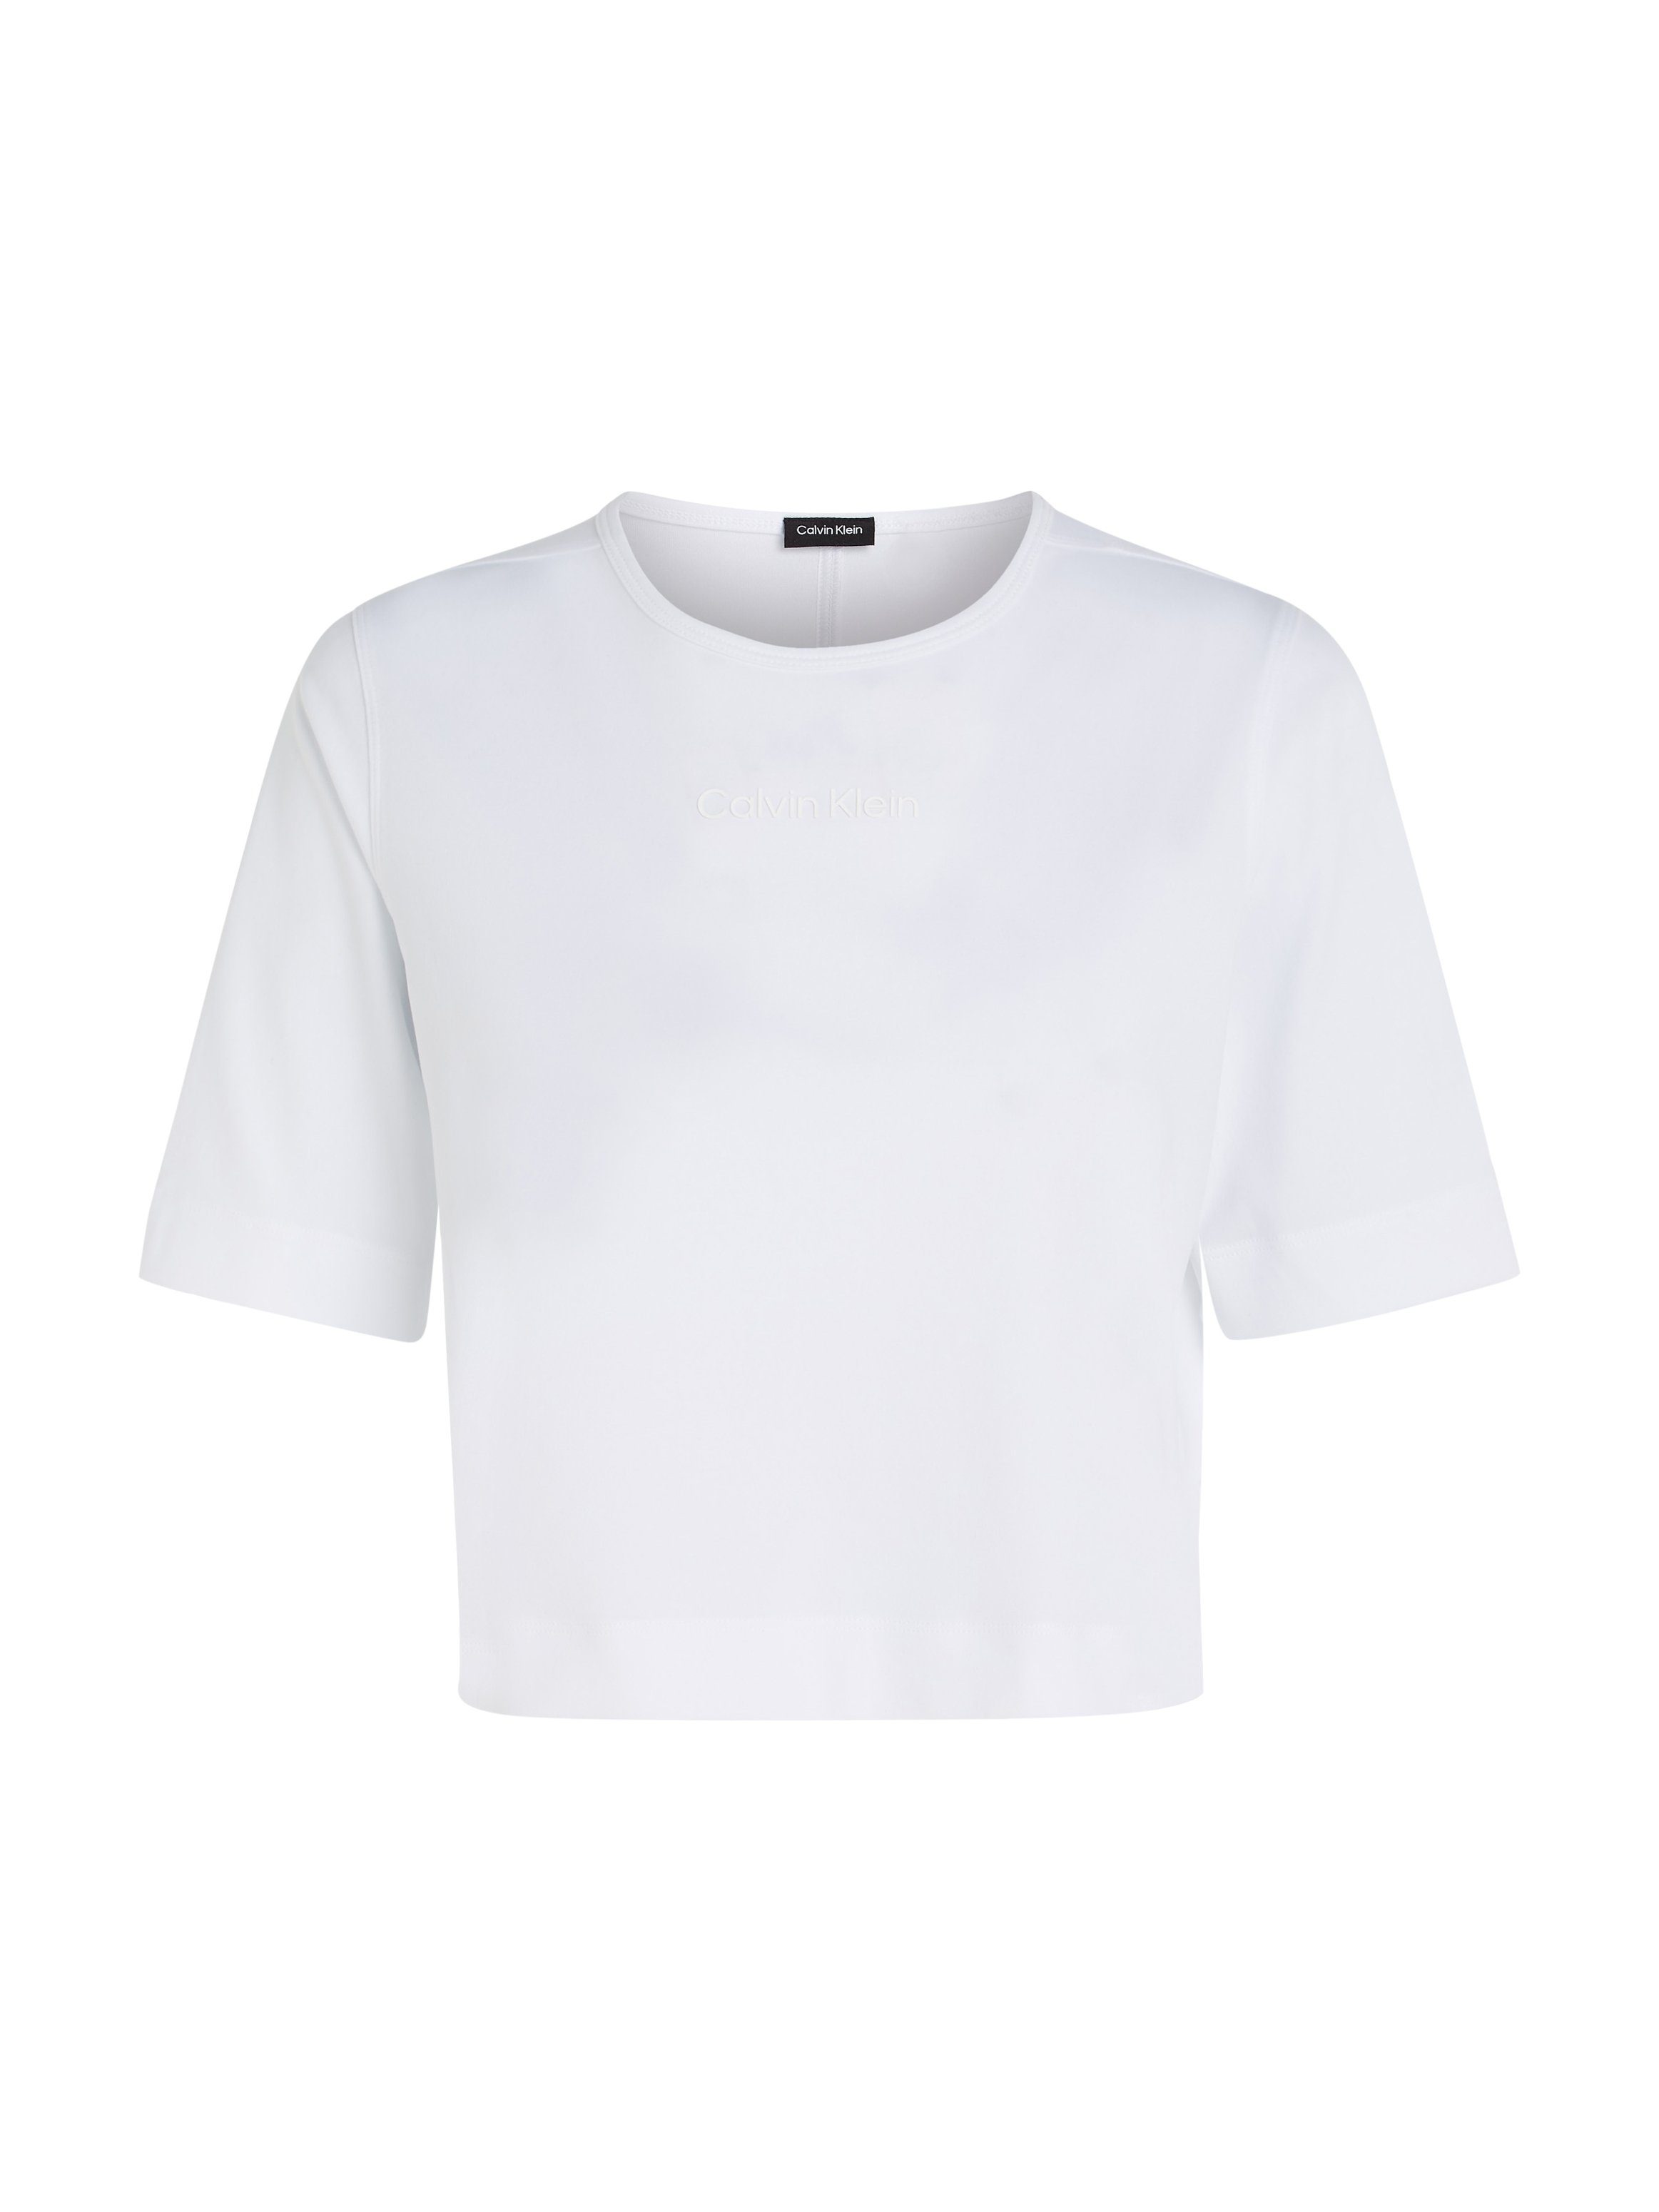 Bright Calvin Klein T-Shirt Sport White